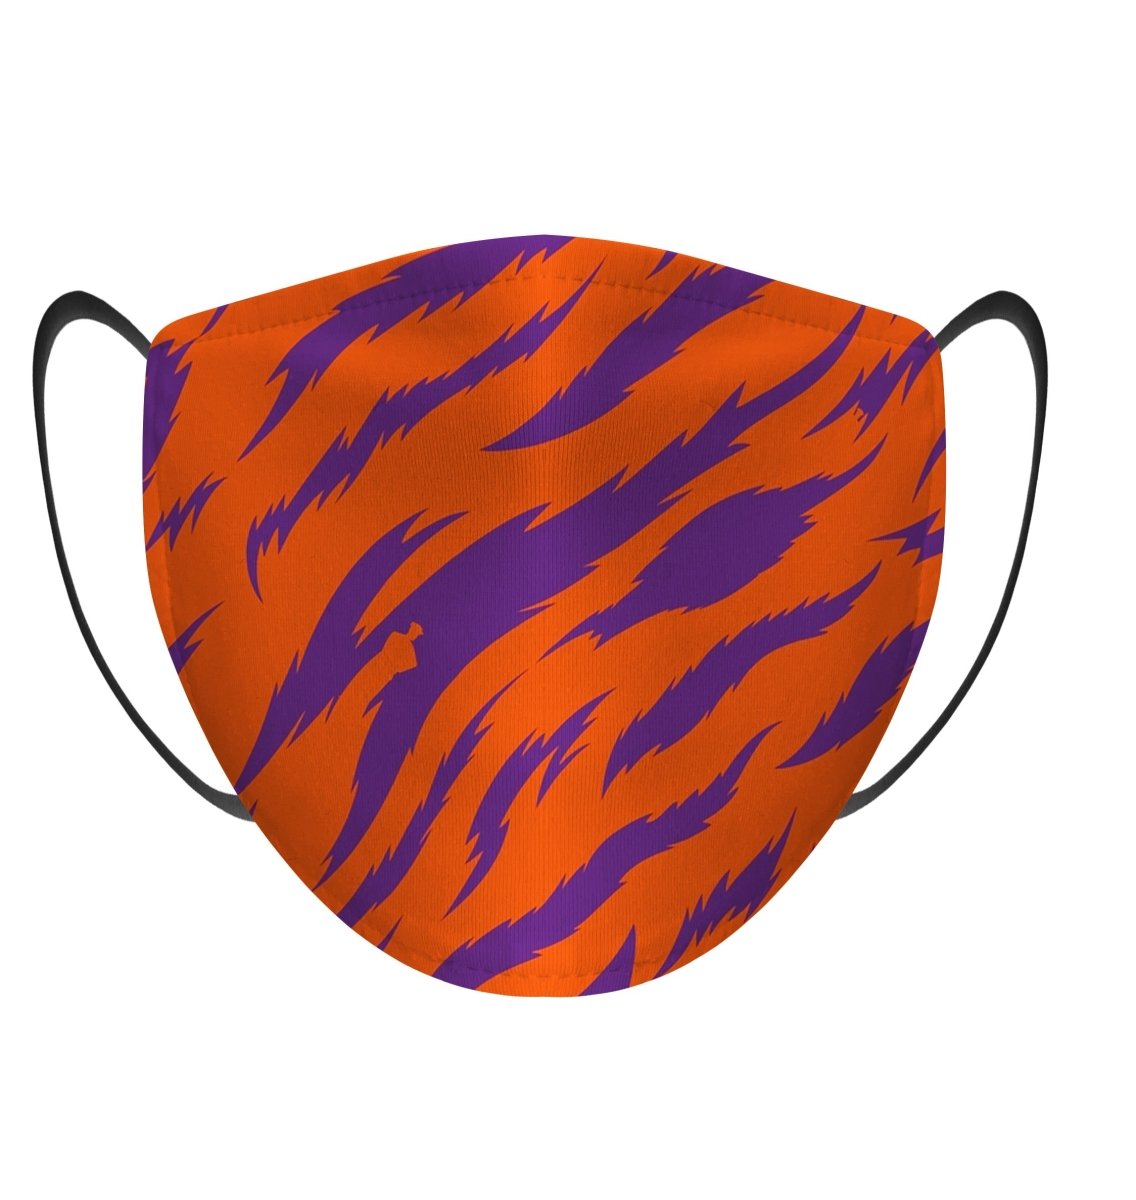 Rock 'Em Face Mask- Orange and Purple Tiger Stripe - Mr. Knickerbocker